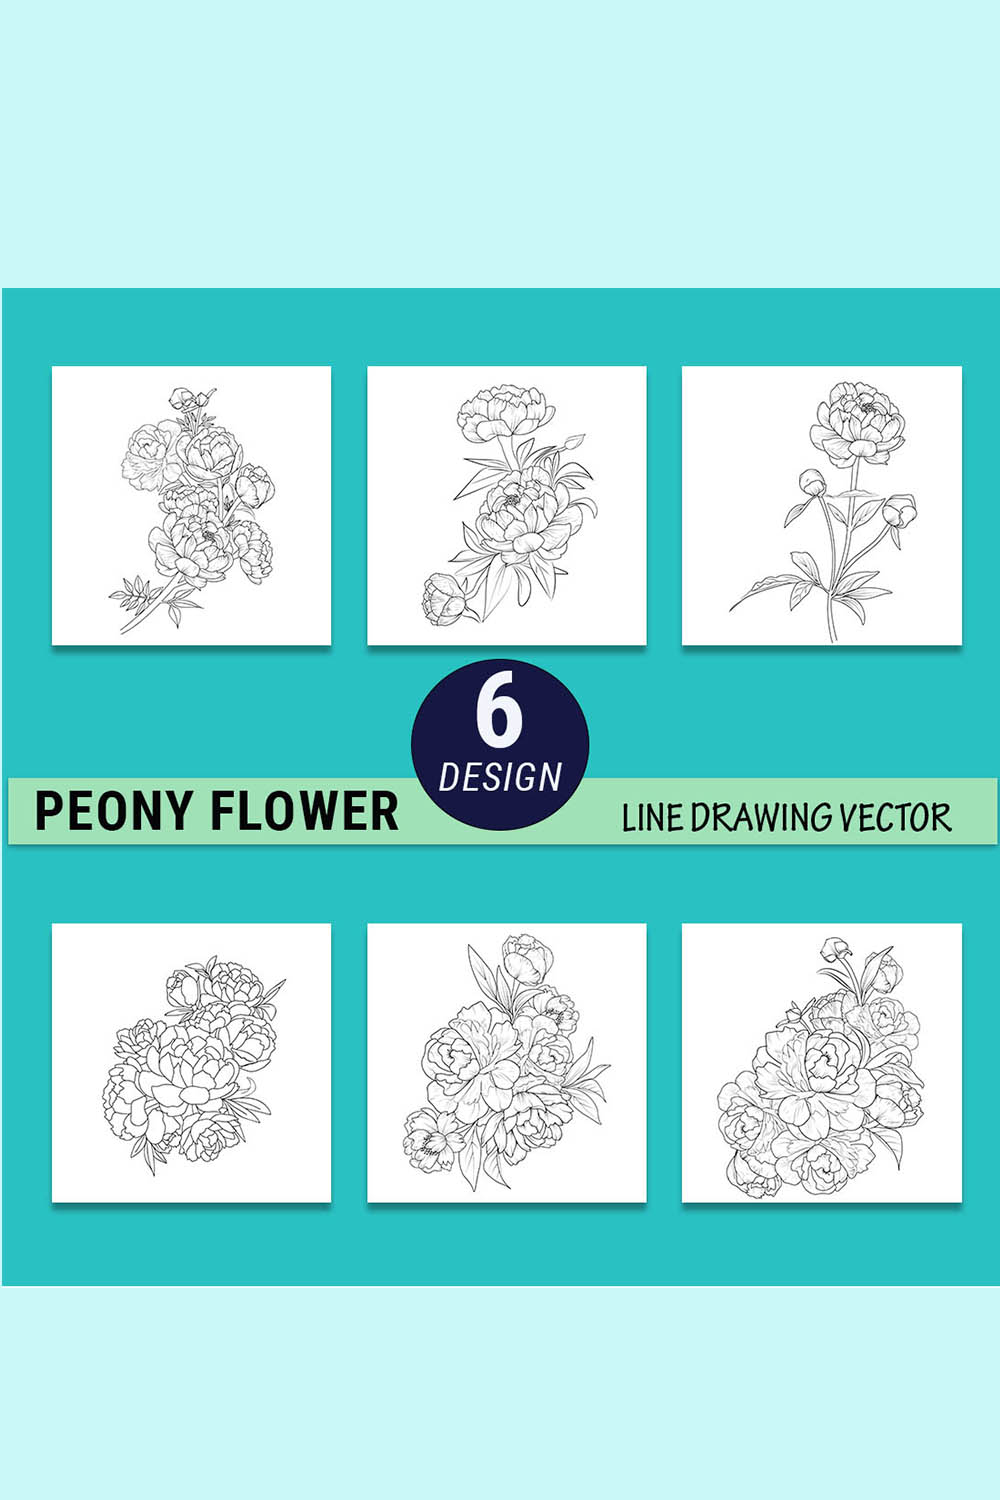 Peony flower line art, peony line drawing tattoo, linework peony tattoo design, scientific peony botanical illustration Peony flower sketch art pinterest preview image.